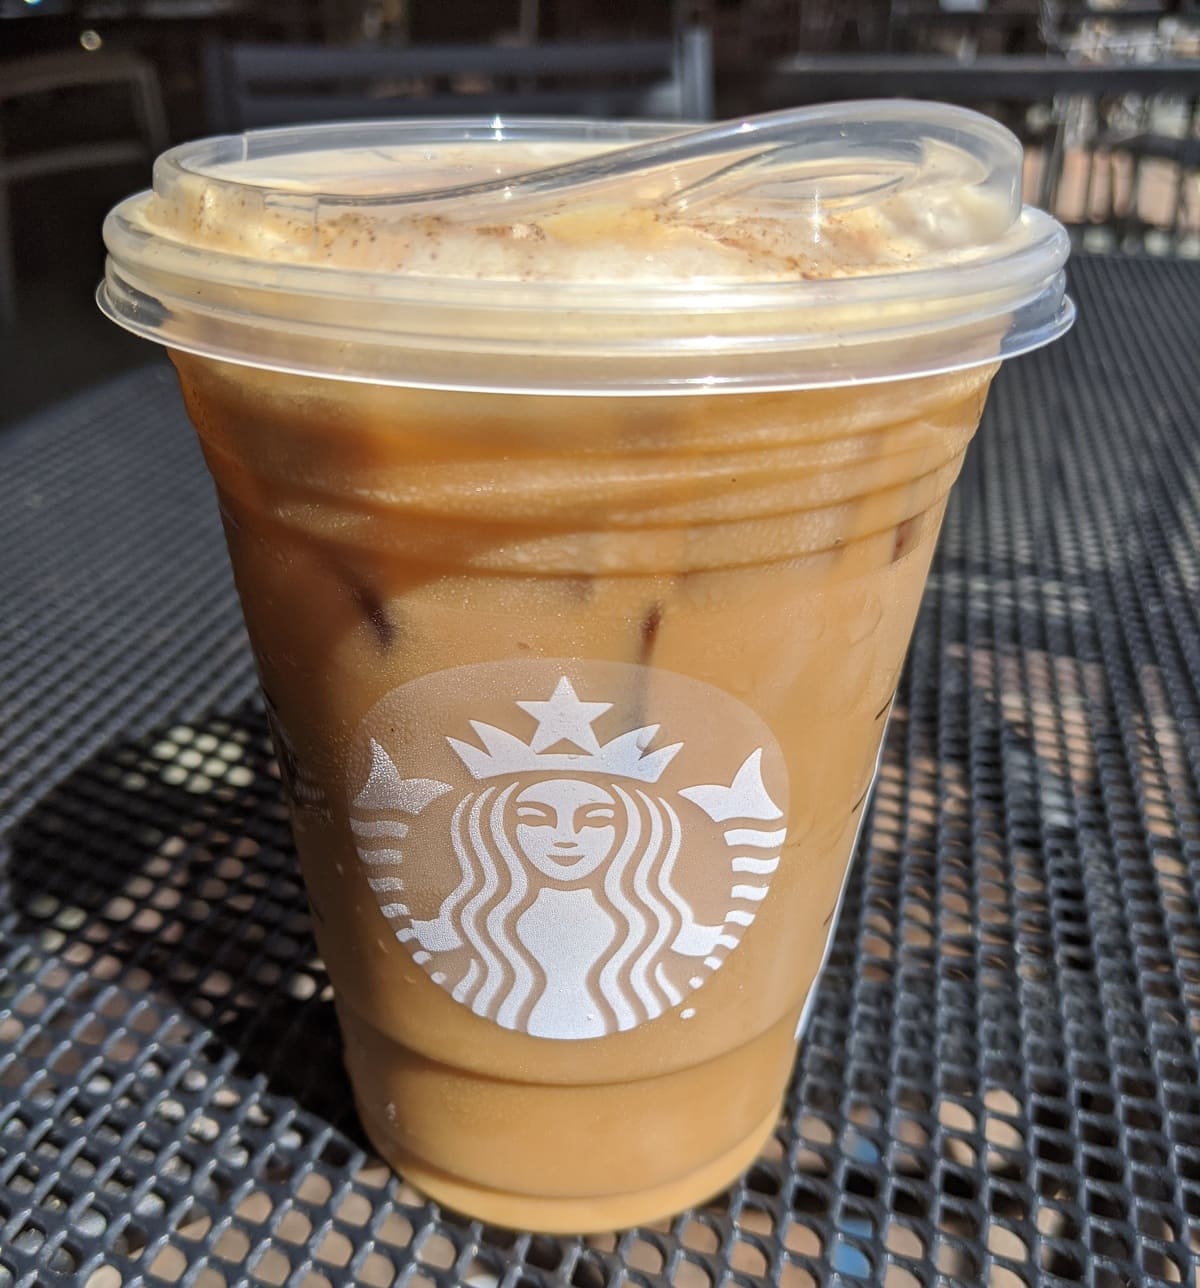 Oleato Starbucks closeup